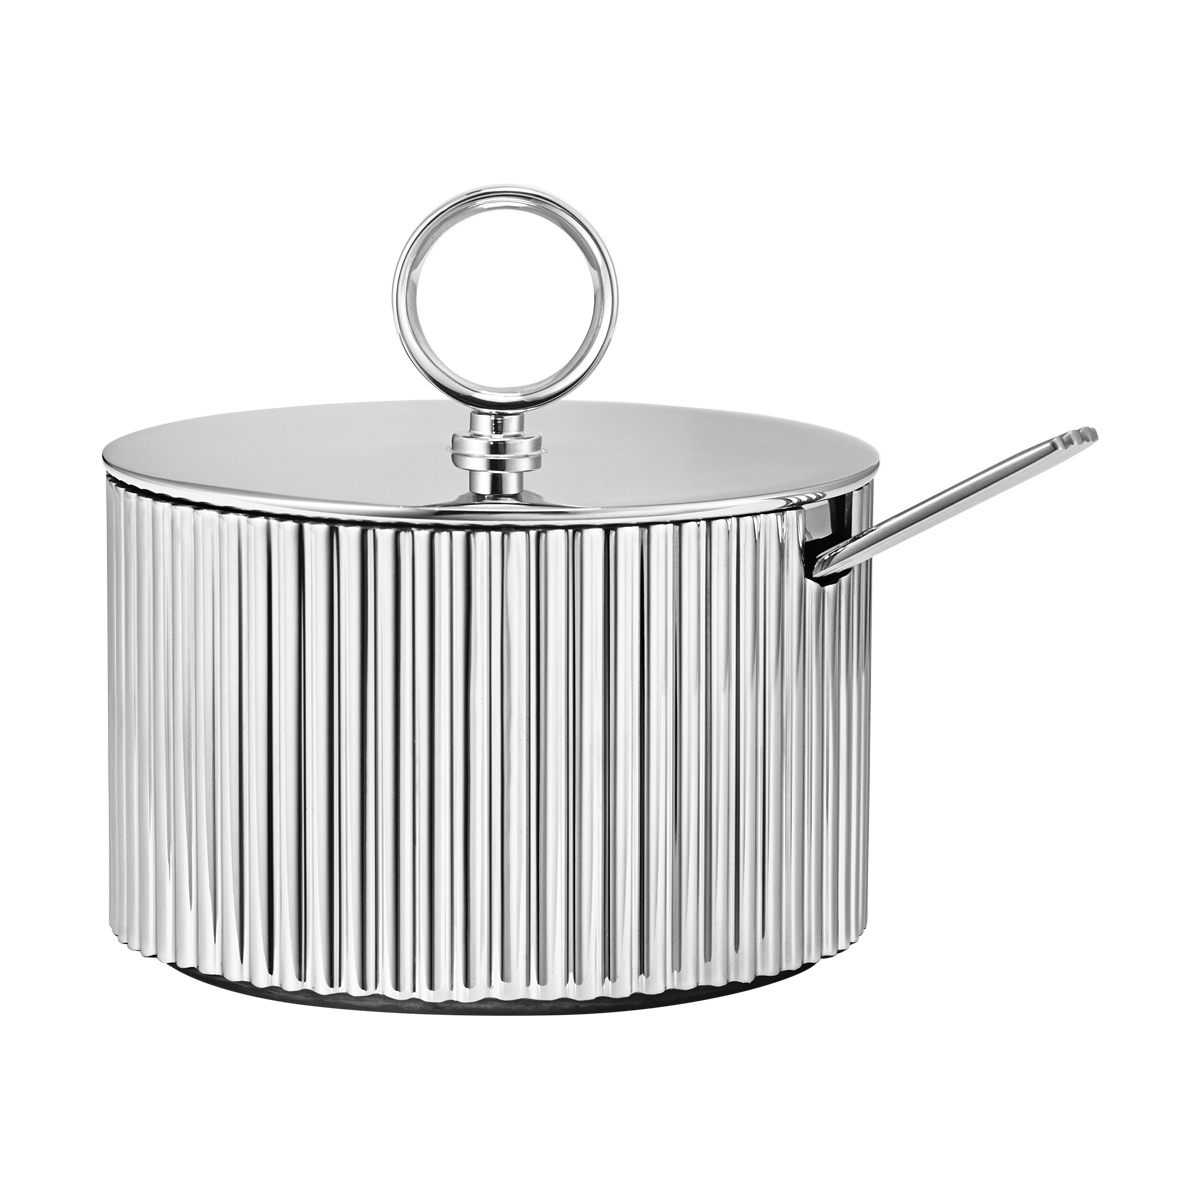 Georg Jensen Bernadotte Stainless Steel Sugar Bowl (Includes Spoon)